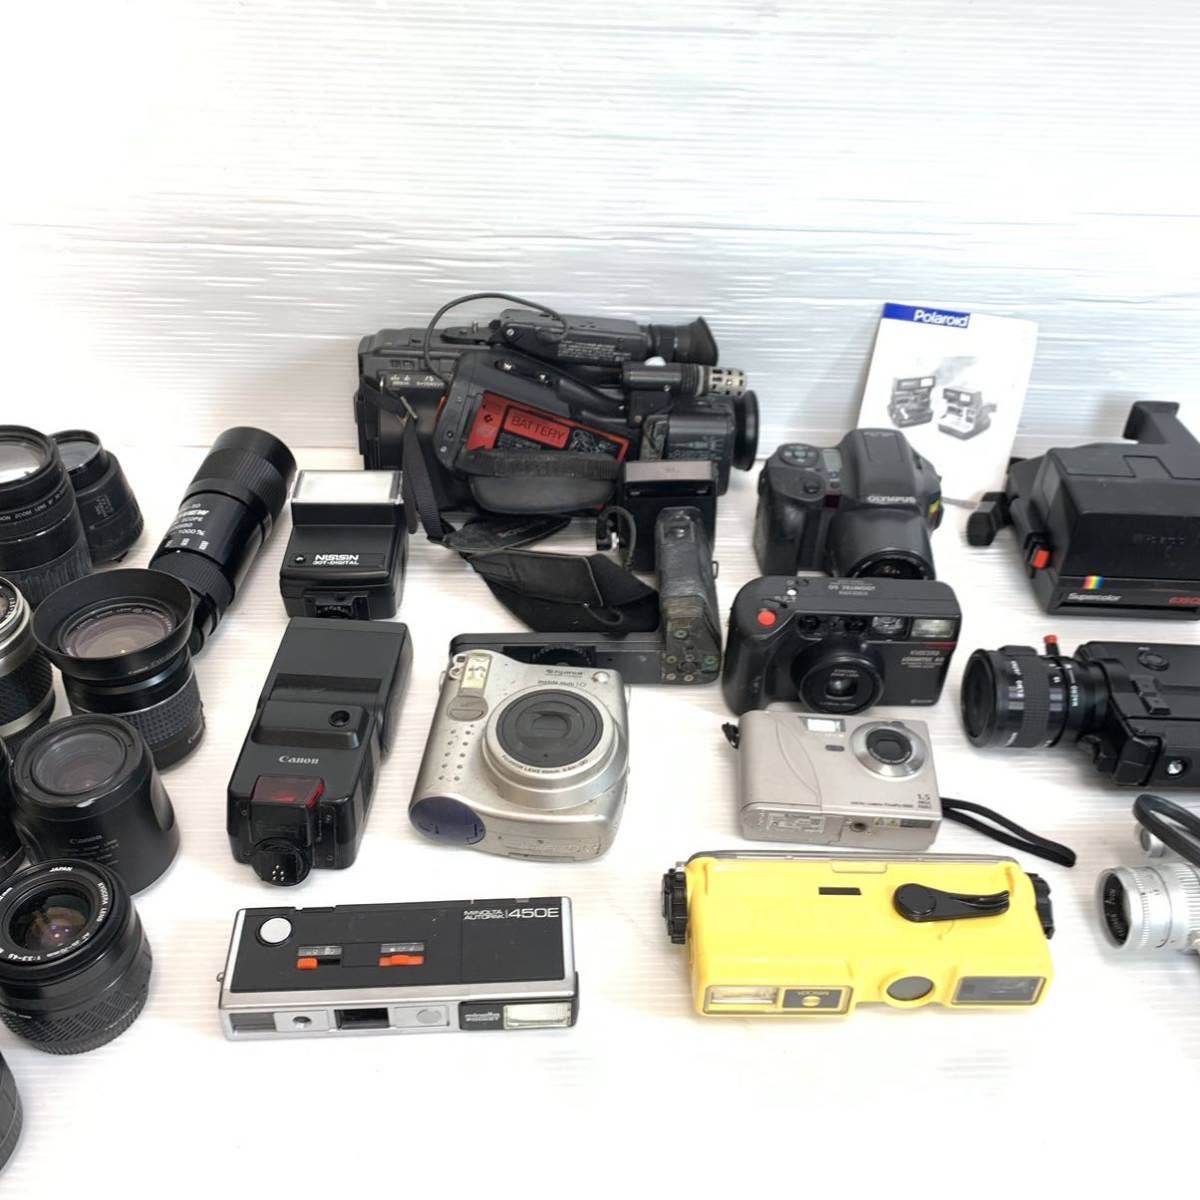 1 jpy start camera large amount lens various set sale operation not yet verification junk 